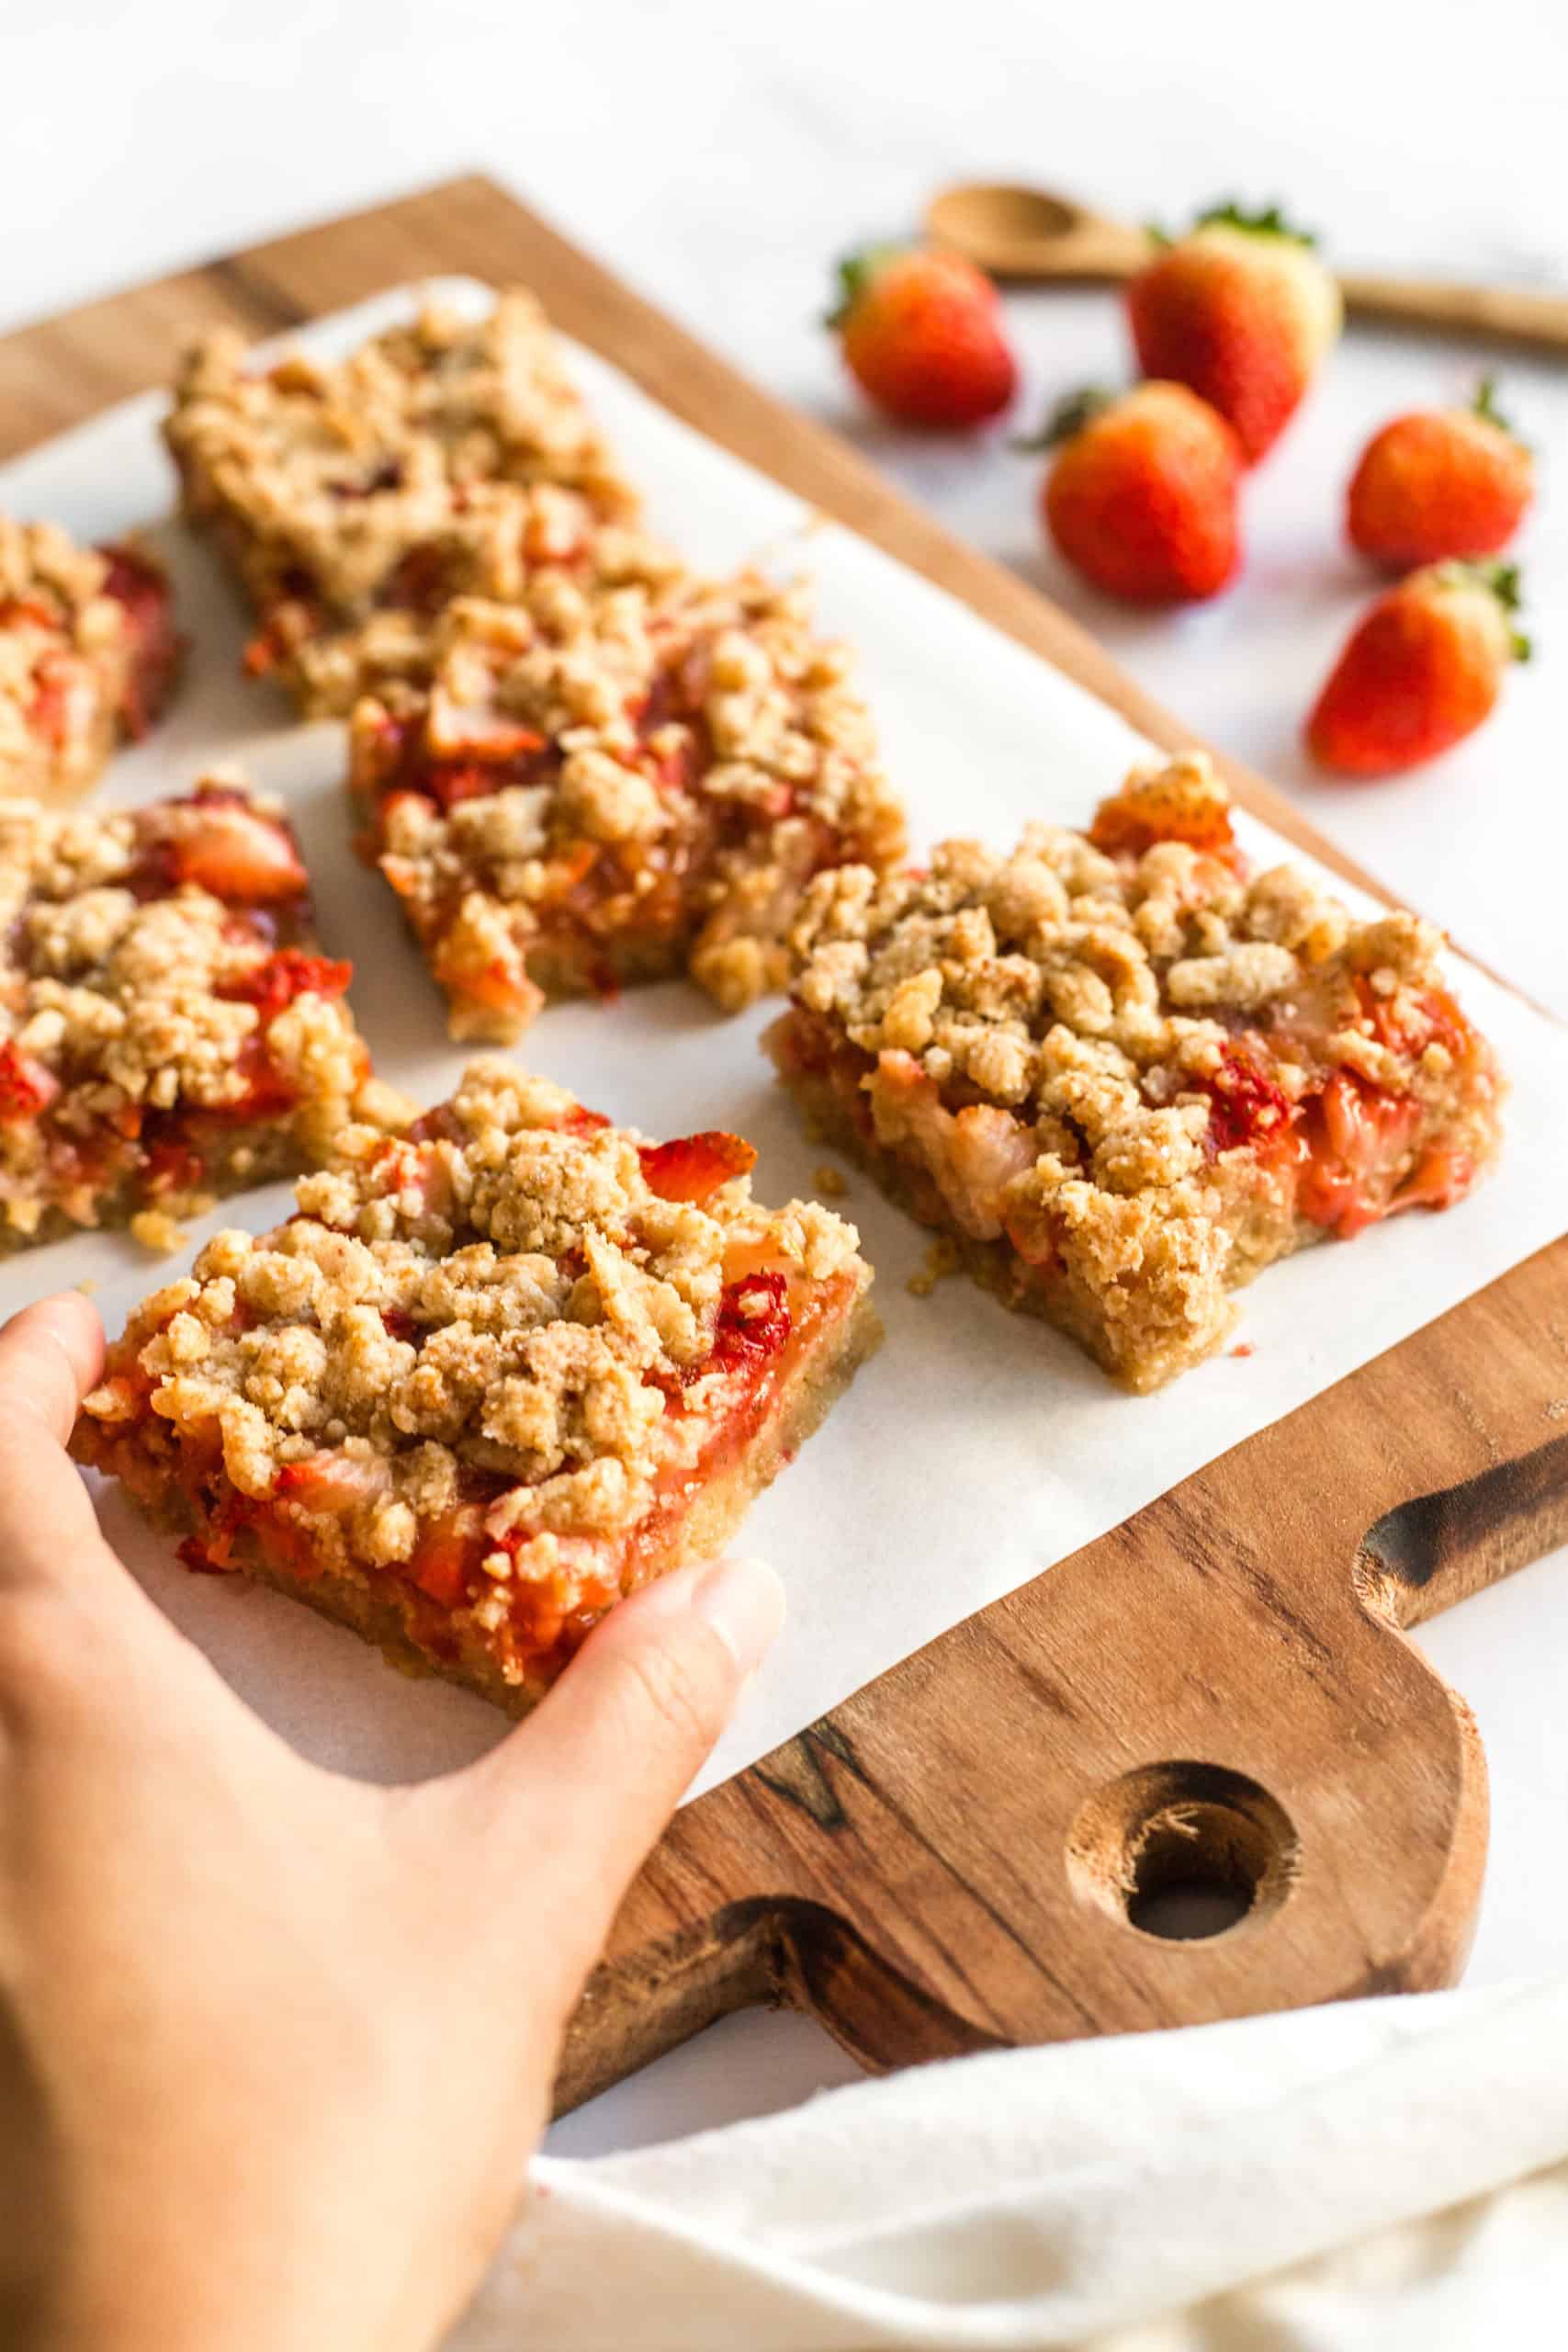 Gluten-free strawberry crumb bars on a wooden board